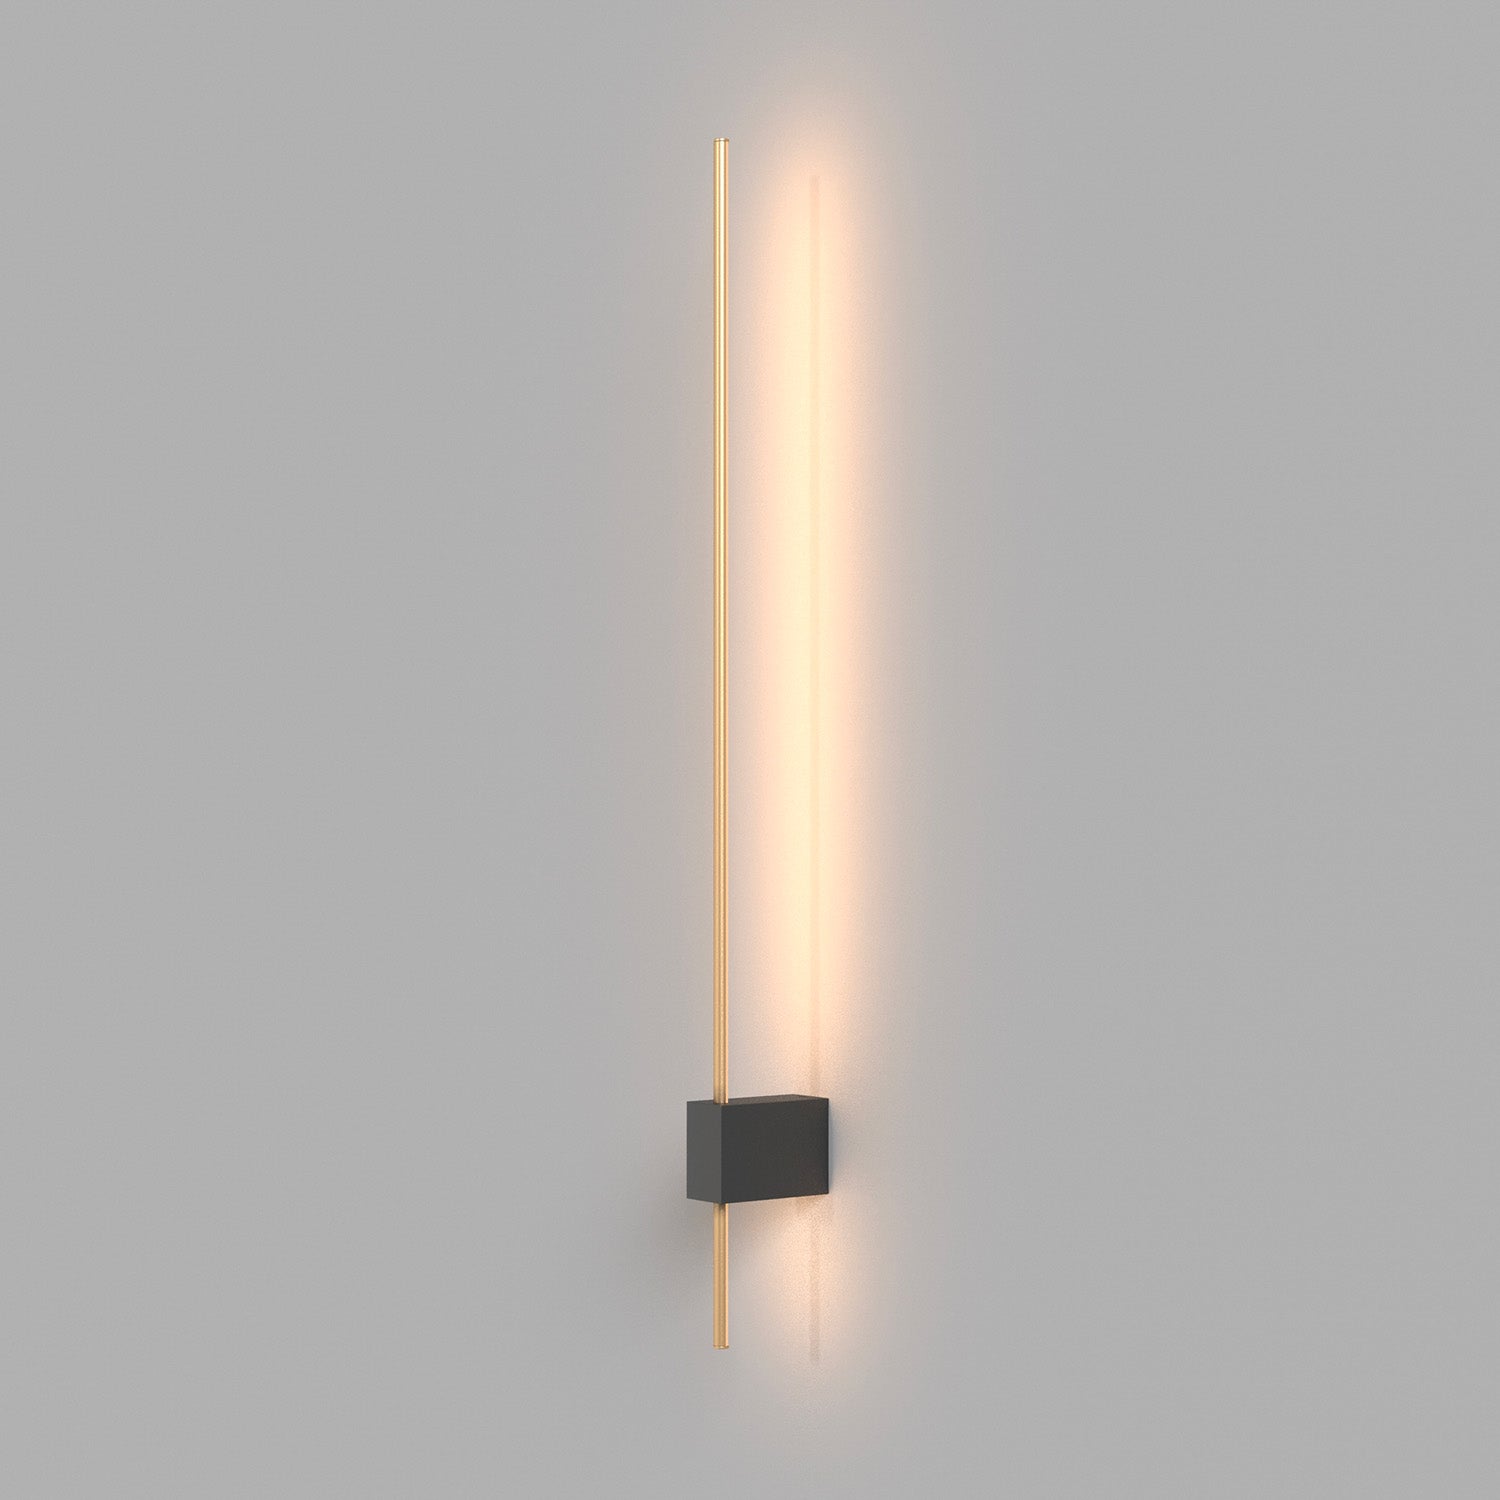 PARS A - Integrated slim LED wall light, stick shape